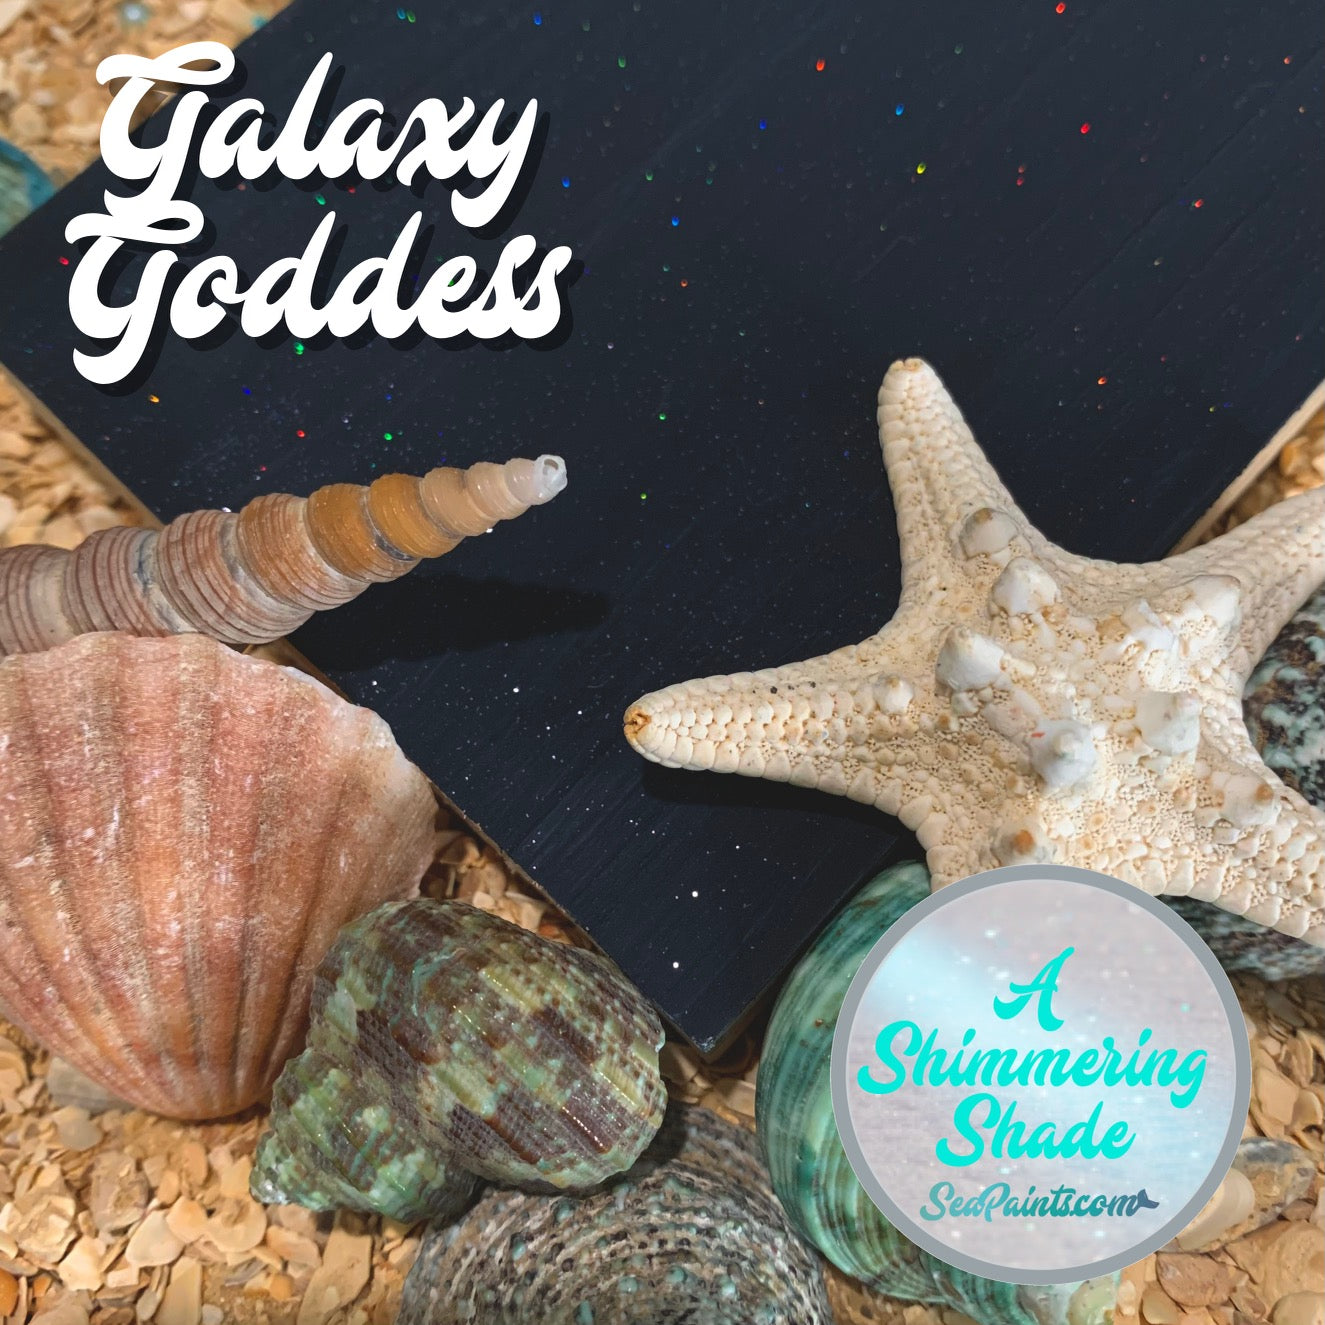 Galaxy Goddess 🐚 Limited Edition